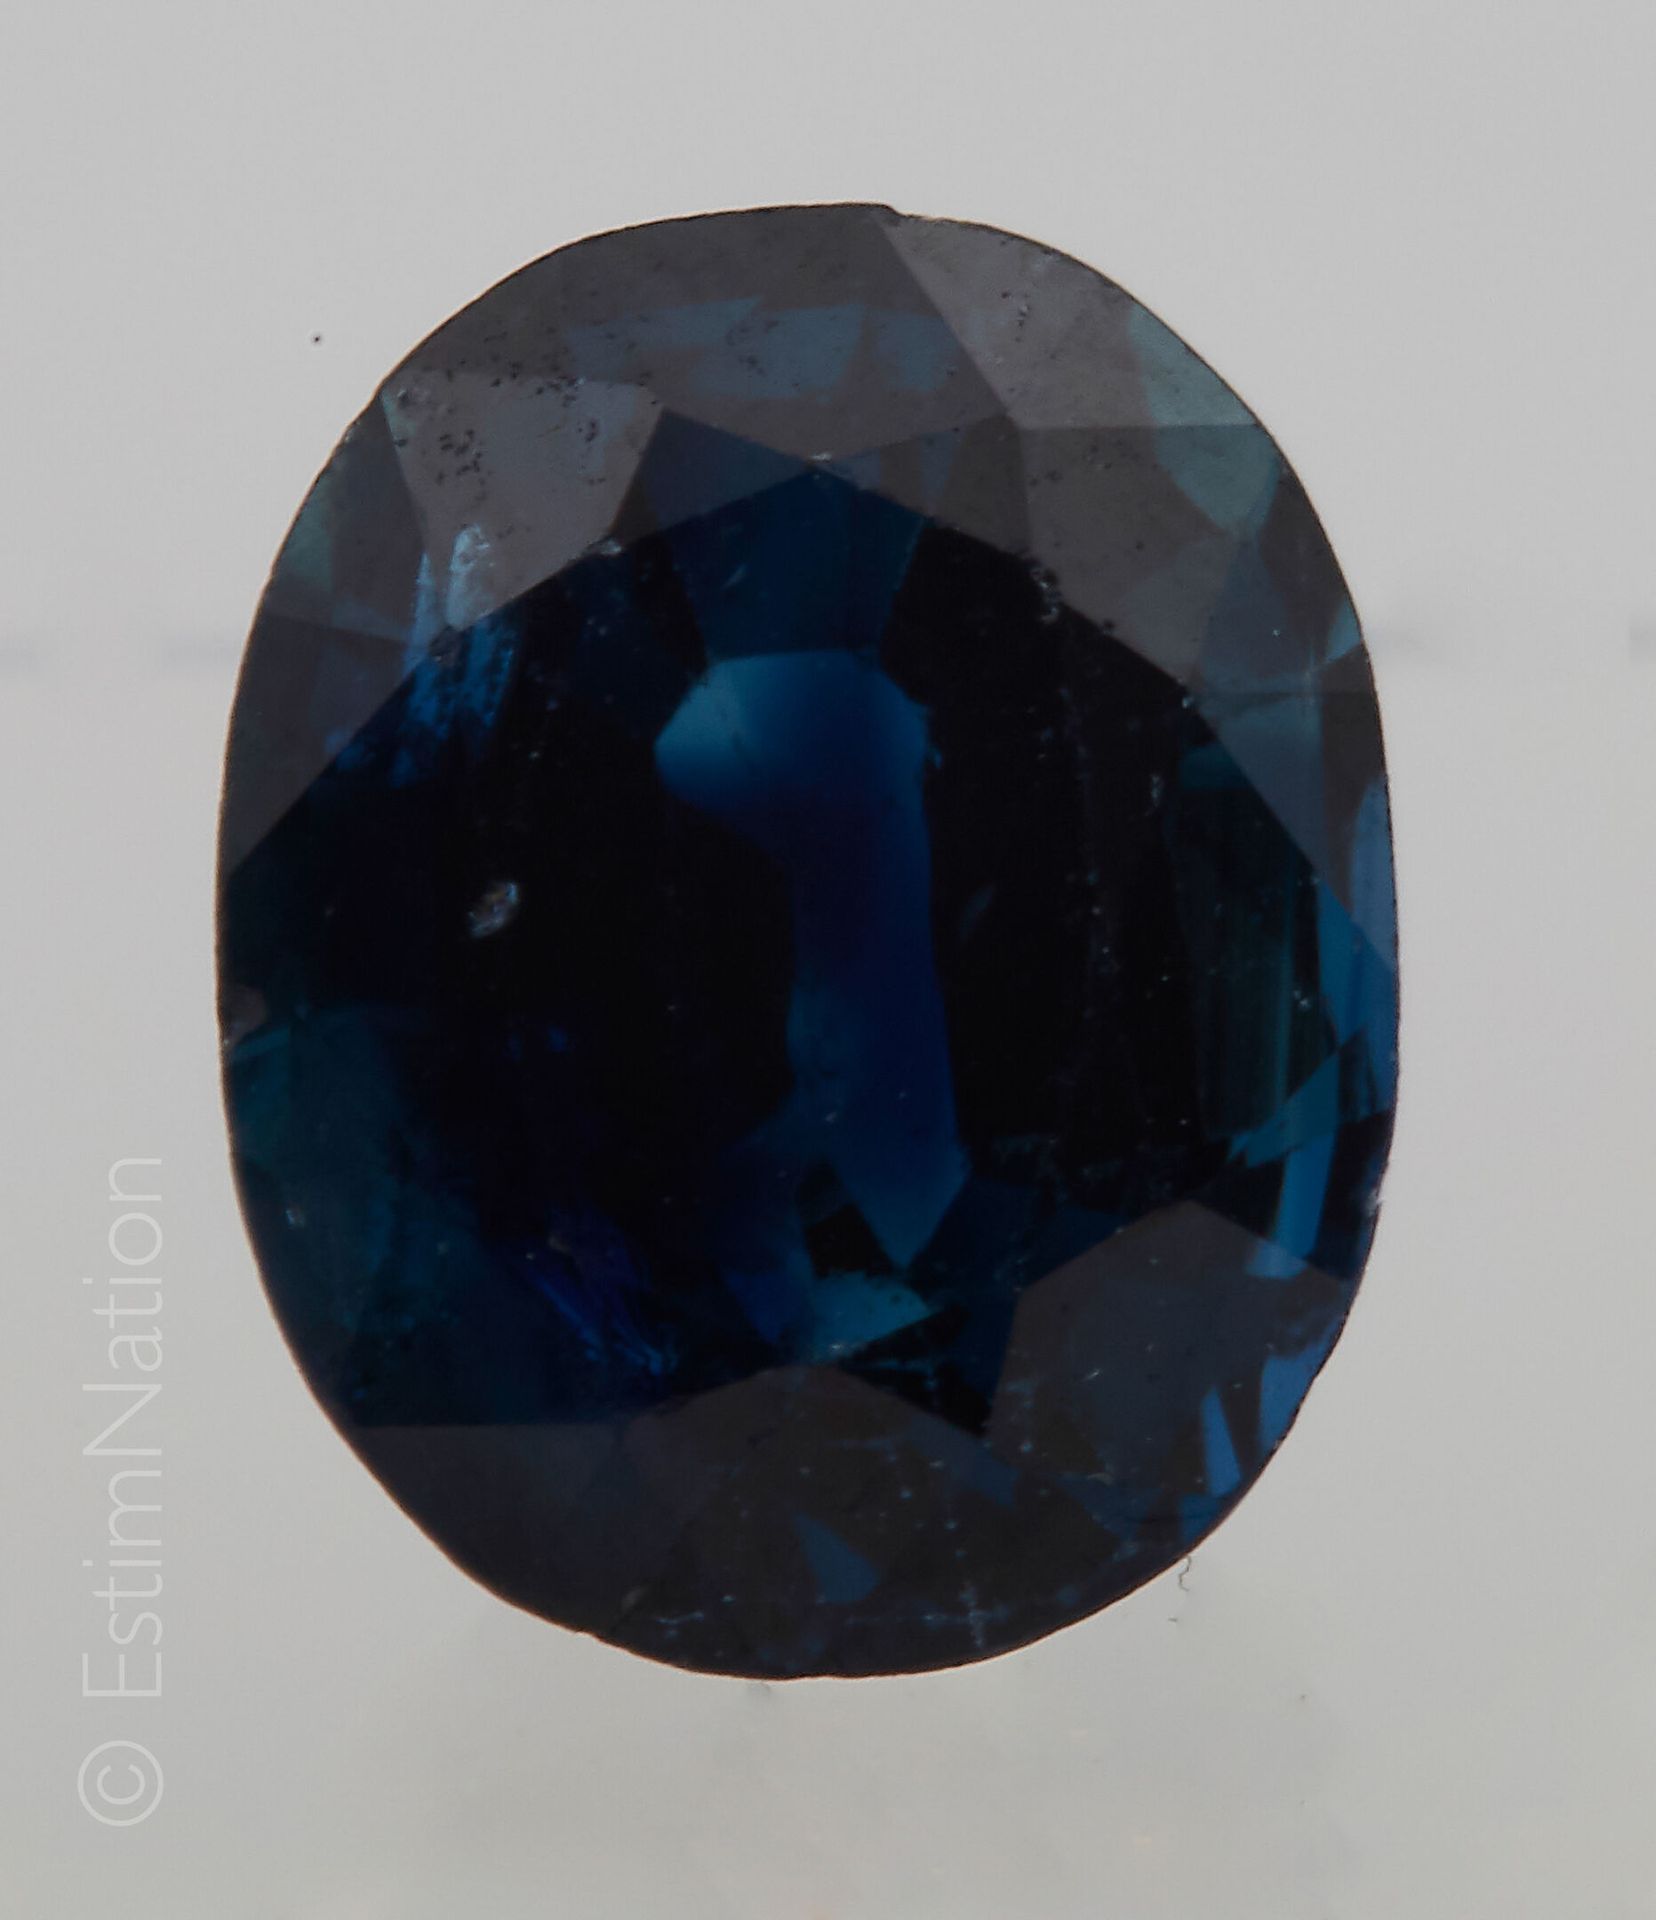 SAPHIR 纸上切割的椭圆蓝宝石

尺寸：7.25 x 5.75 x 4.00 mm左右。